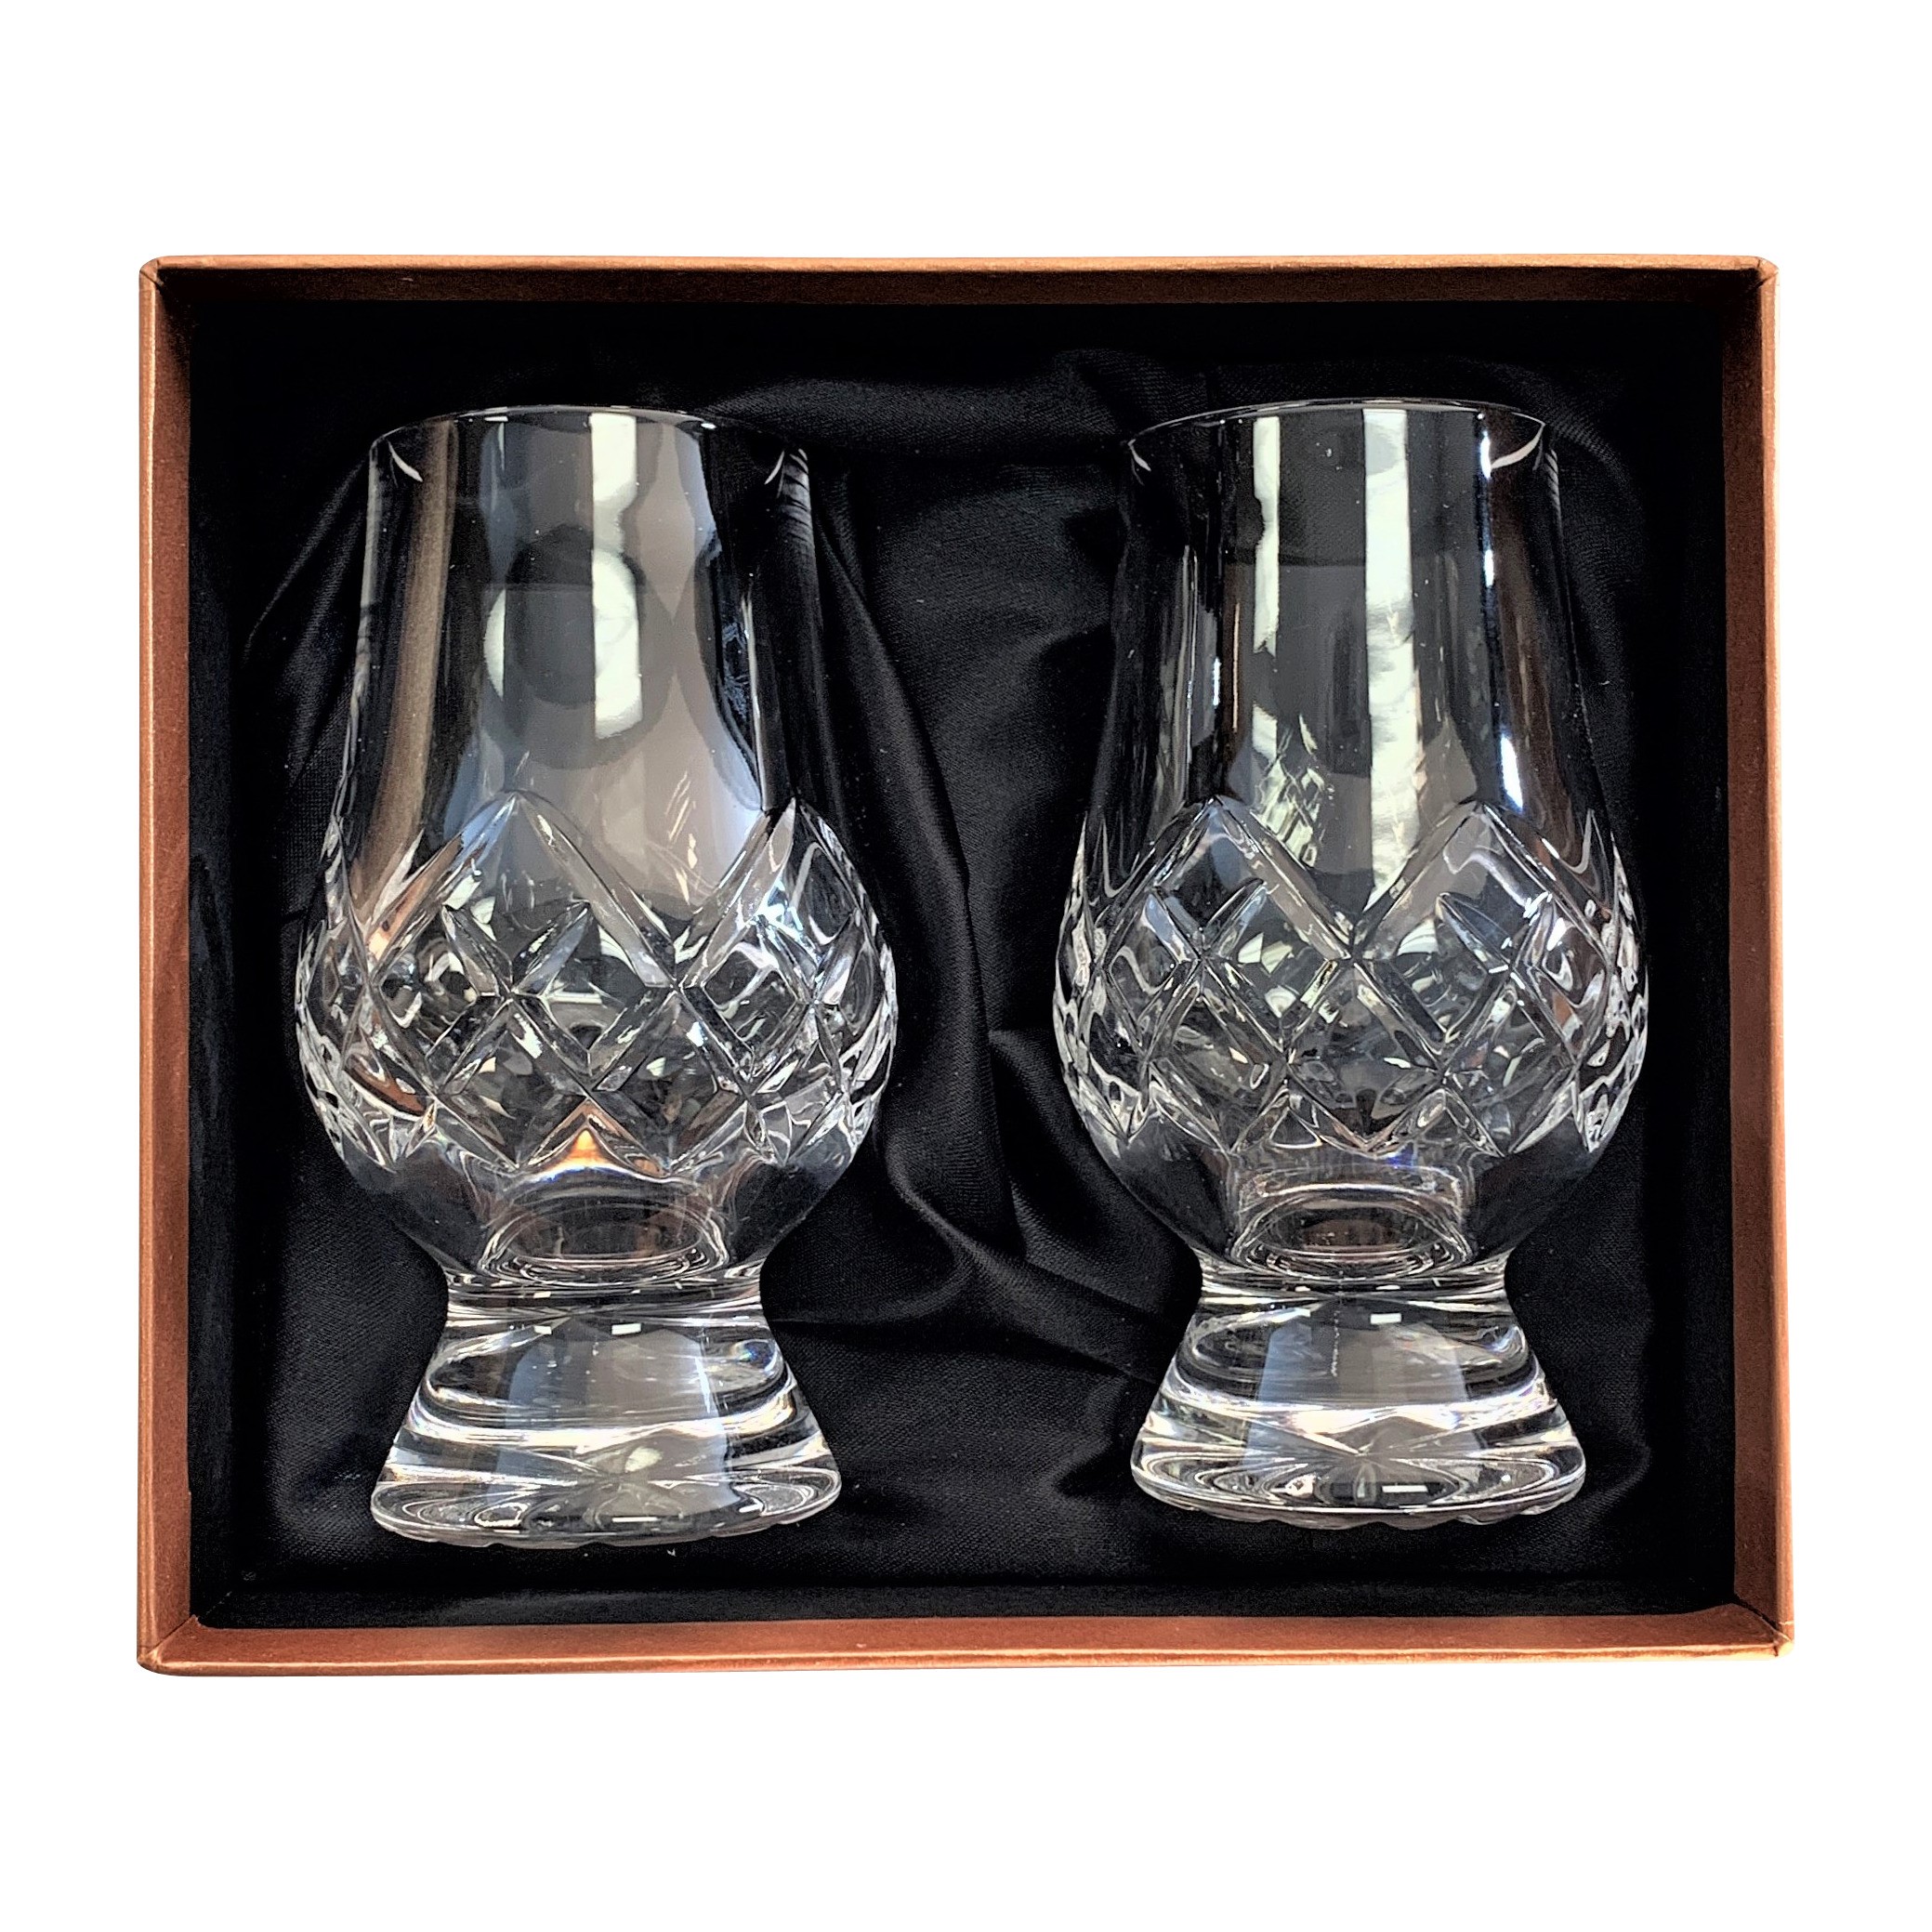 The Glencairn Cut Crystal Whisky Tasting Glass 